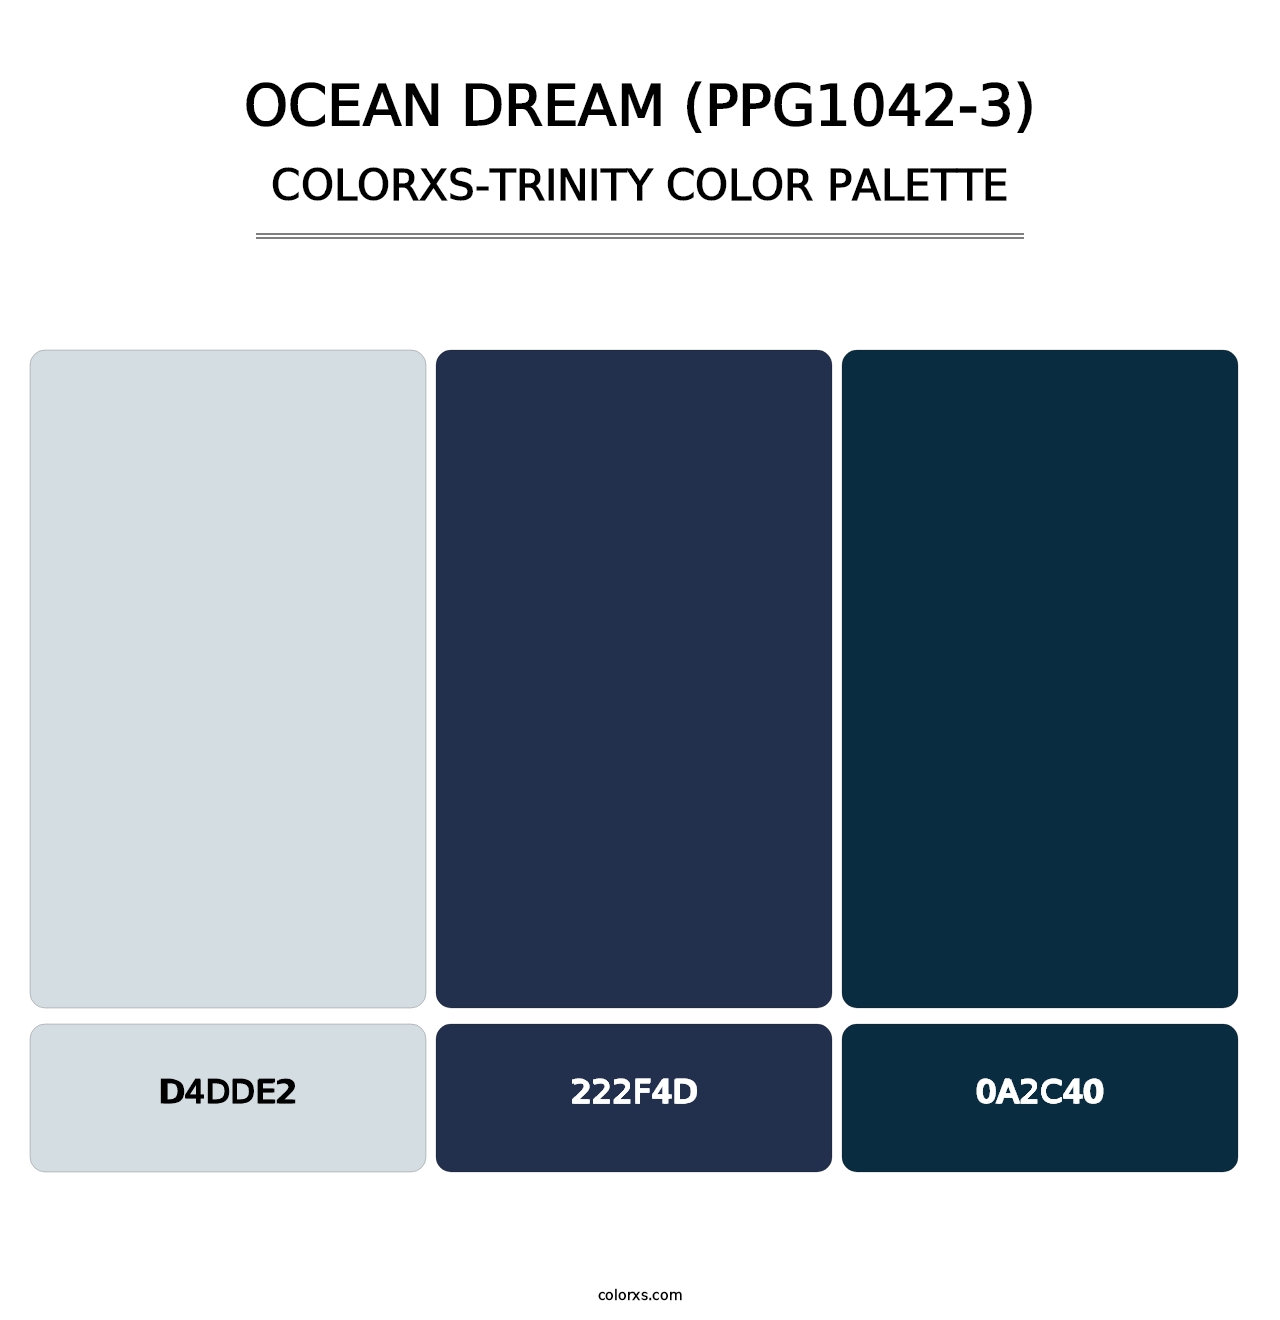 Ocean Dream (PPG1042-3) - Colorxs Trinity Palette